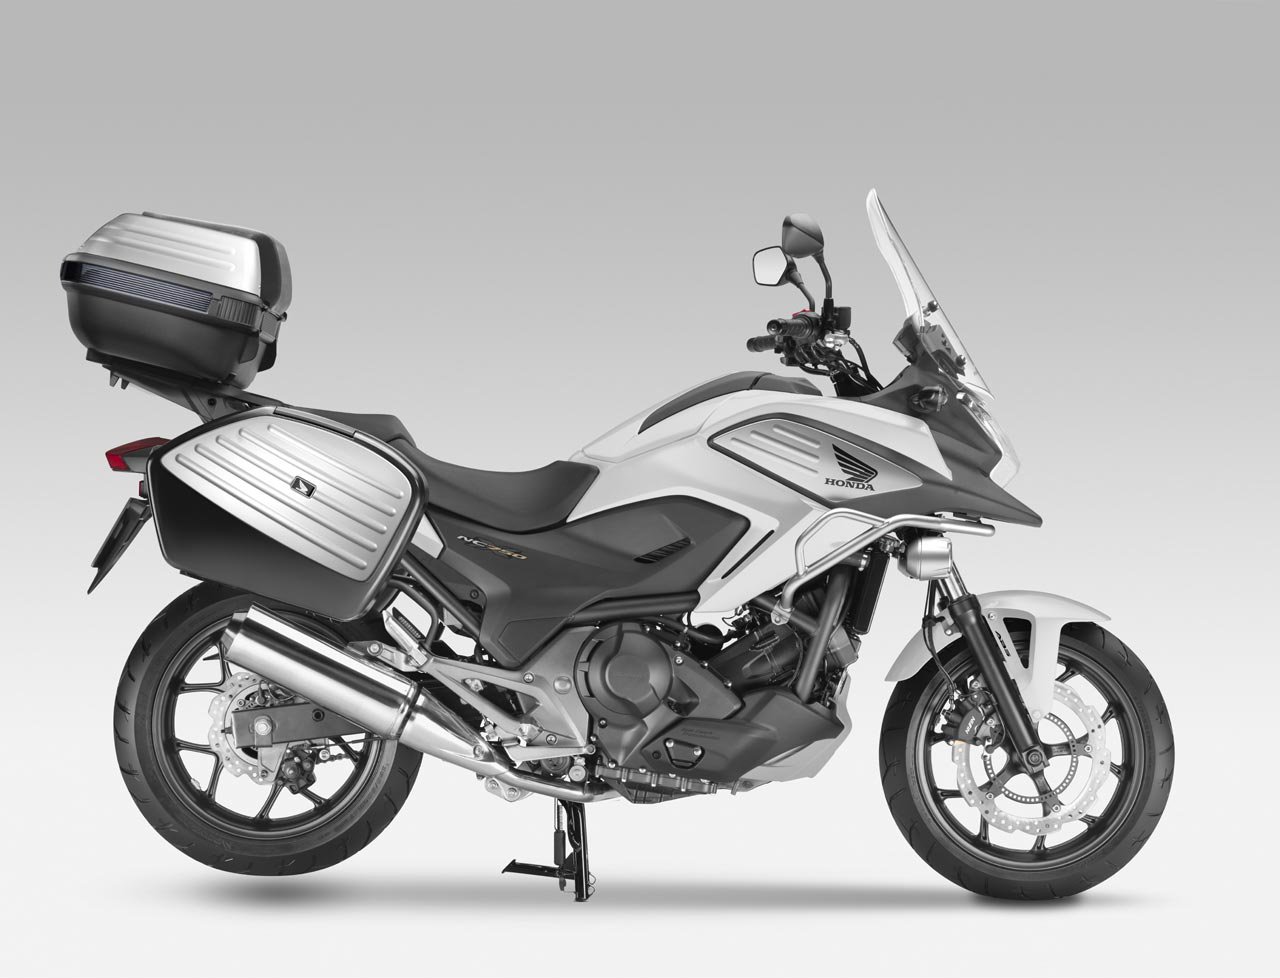 Listino Honda NC750X ABS Granturismo on-off - image 13506_1 on https://moto.motori.net